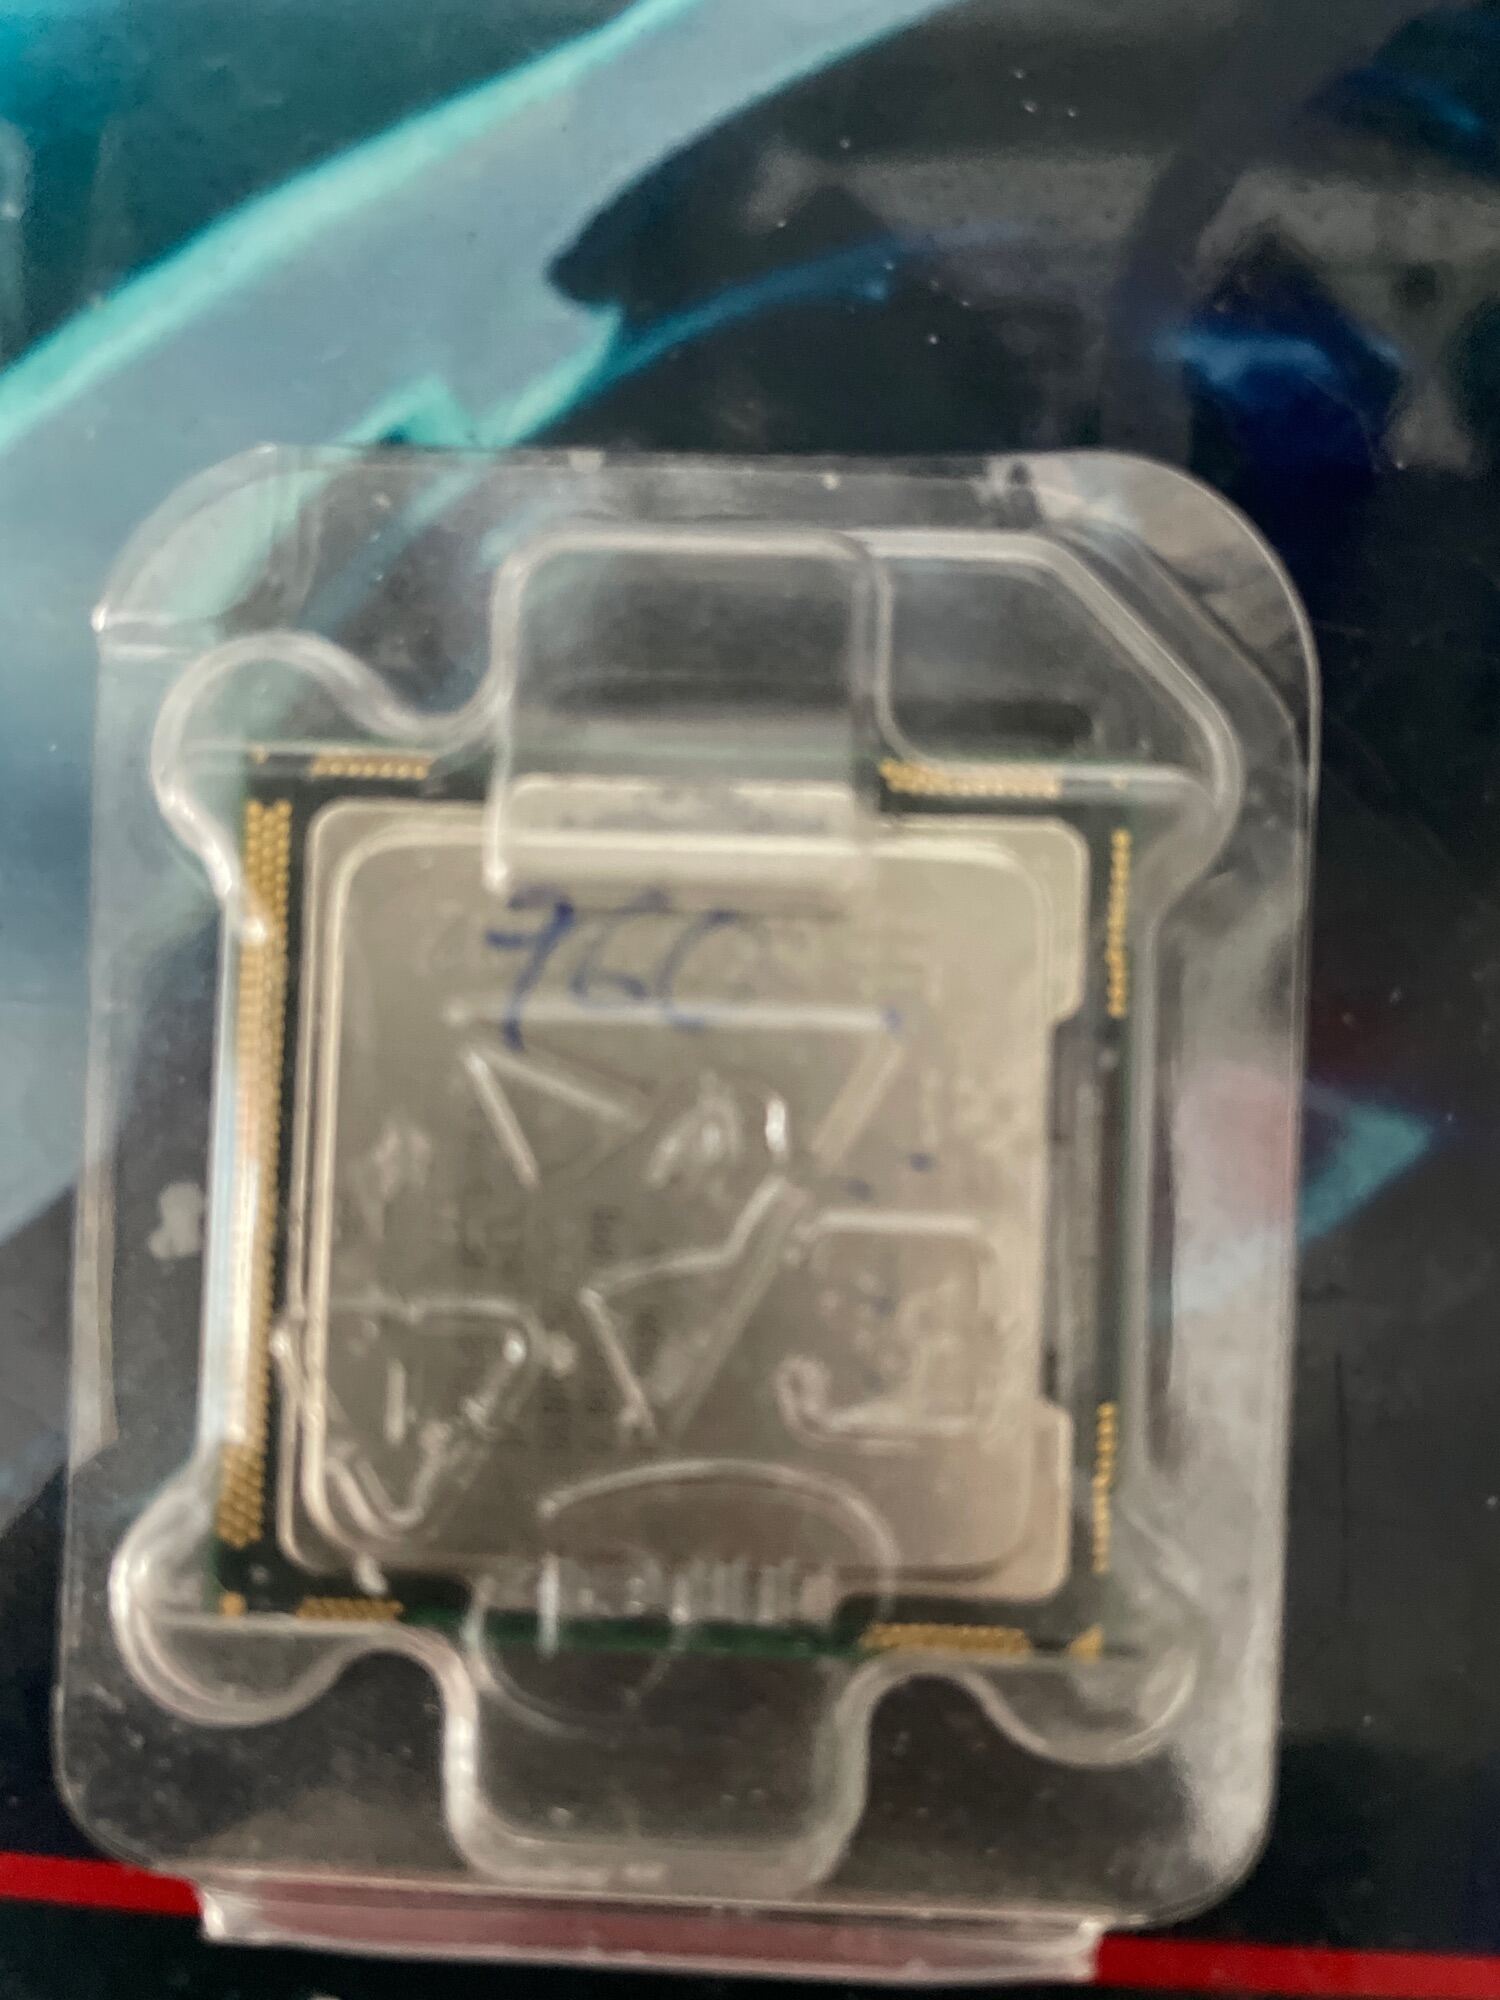 Chip i7 2600 socket 1155 gan main h61-b75 + keo tan nhiet cho cpu gia 550k